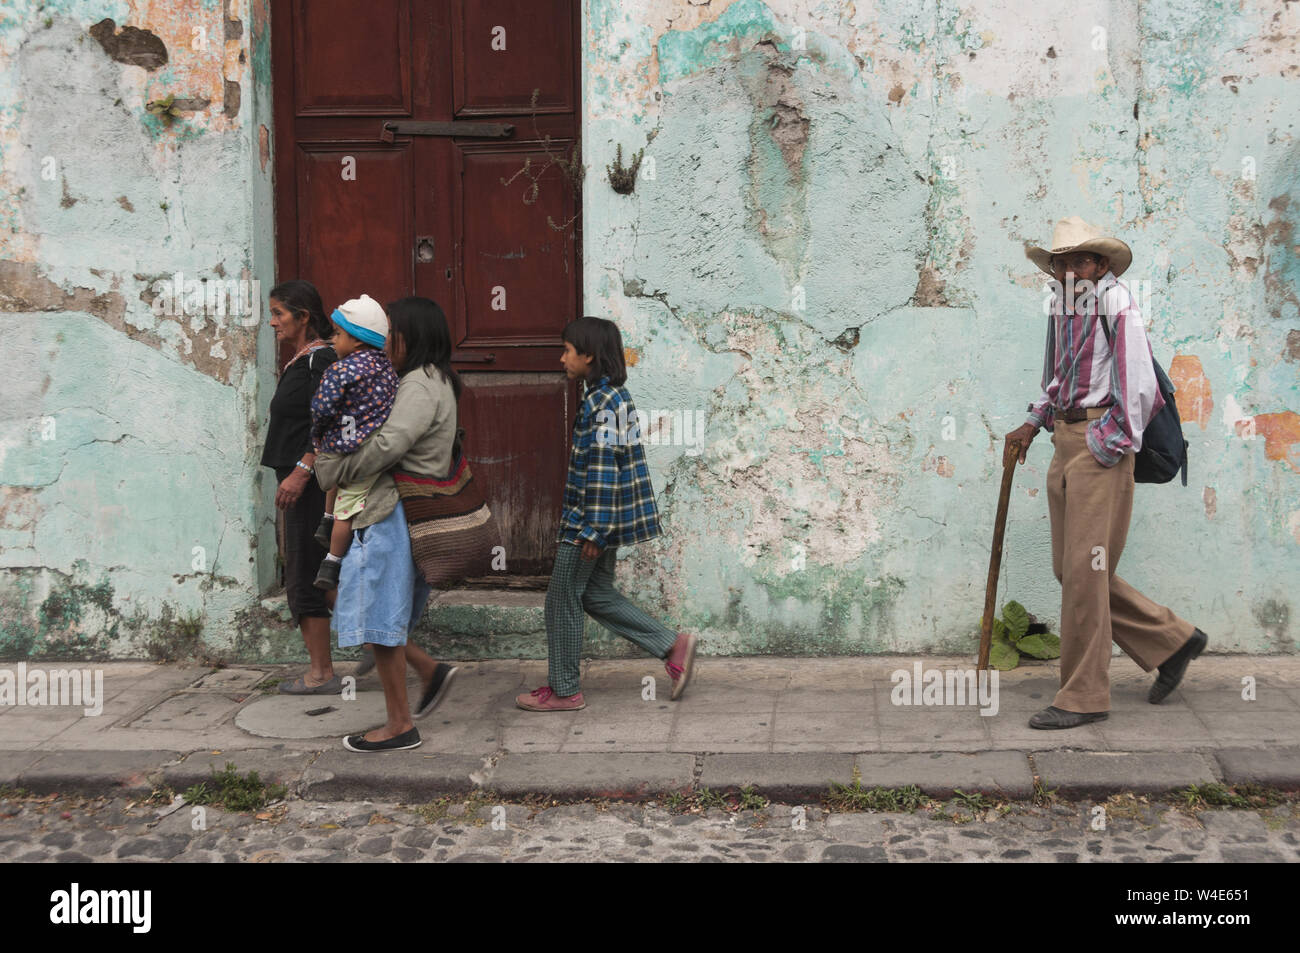 Guatemala, Antigua, street scene mit Familie farbenfrohes Gebäude vorbei gehen. Stockfoto